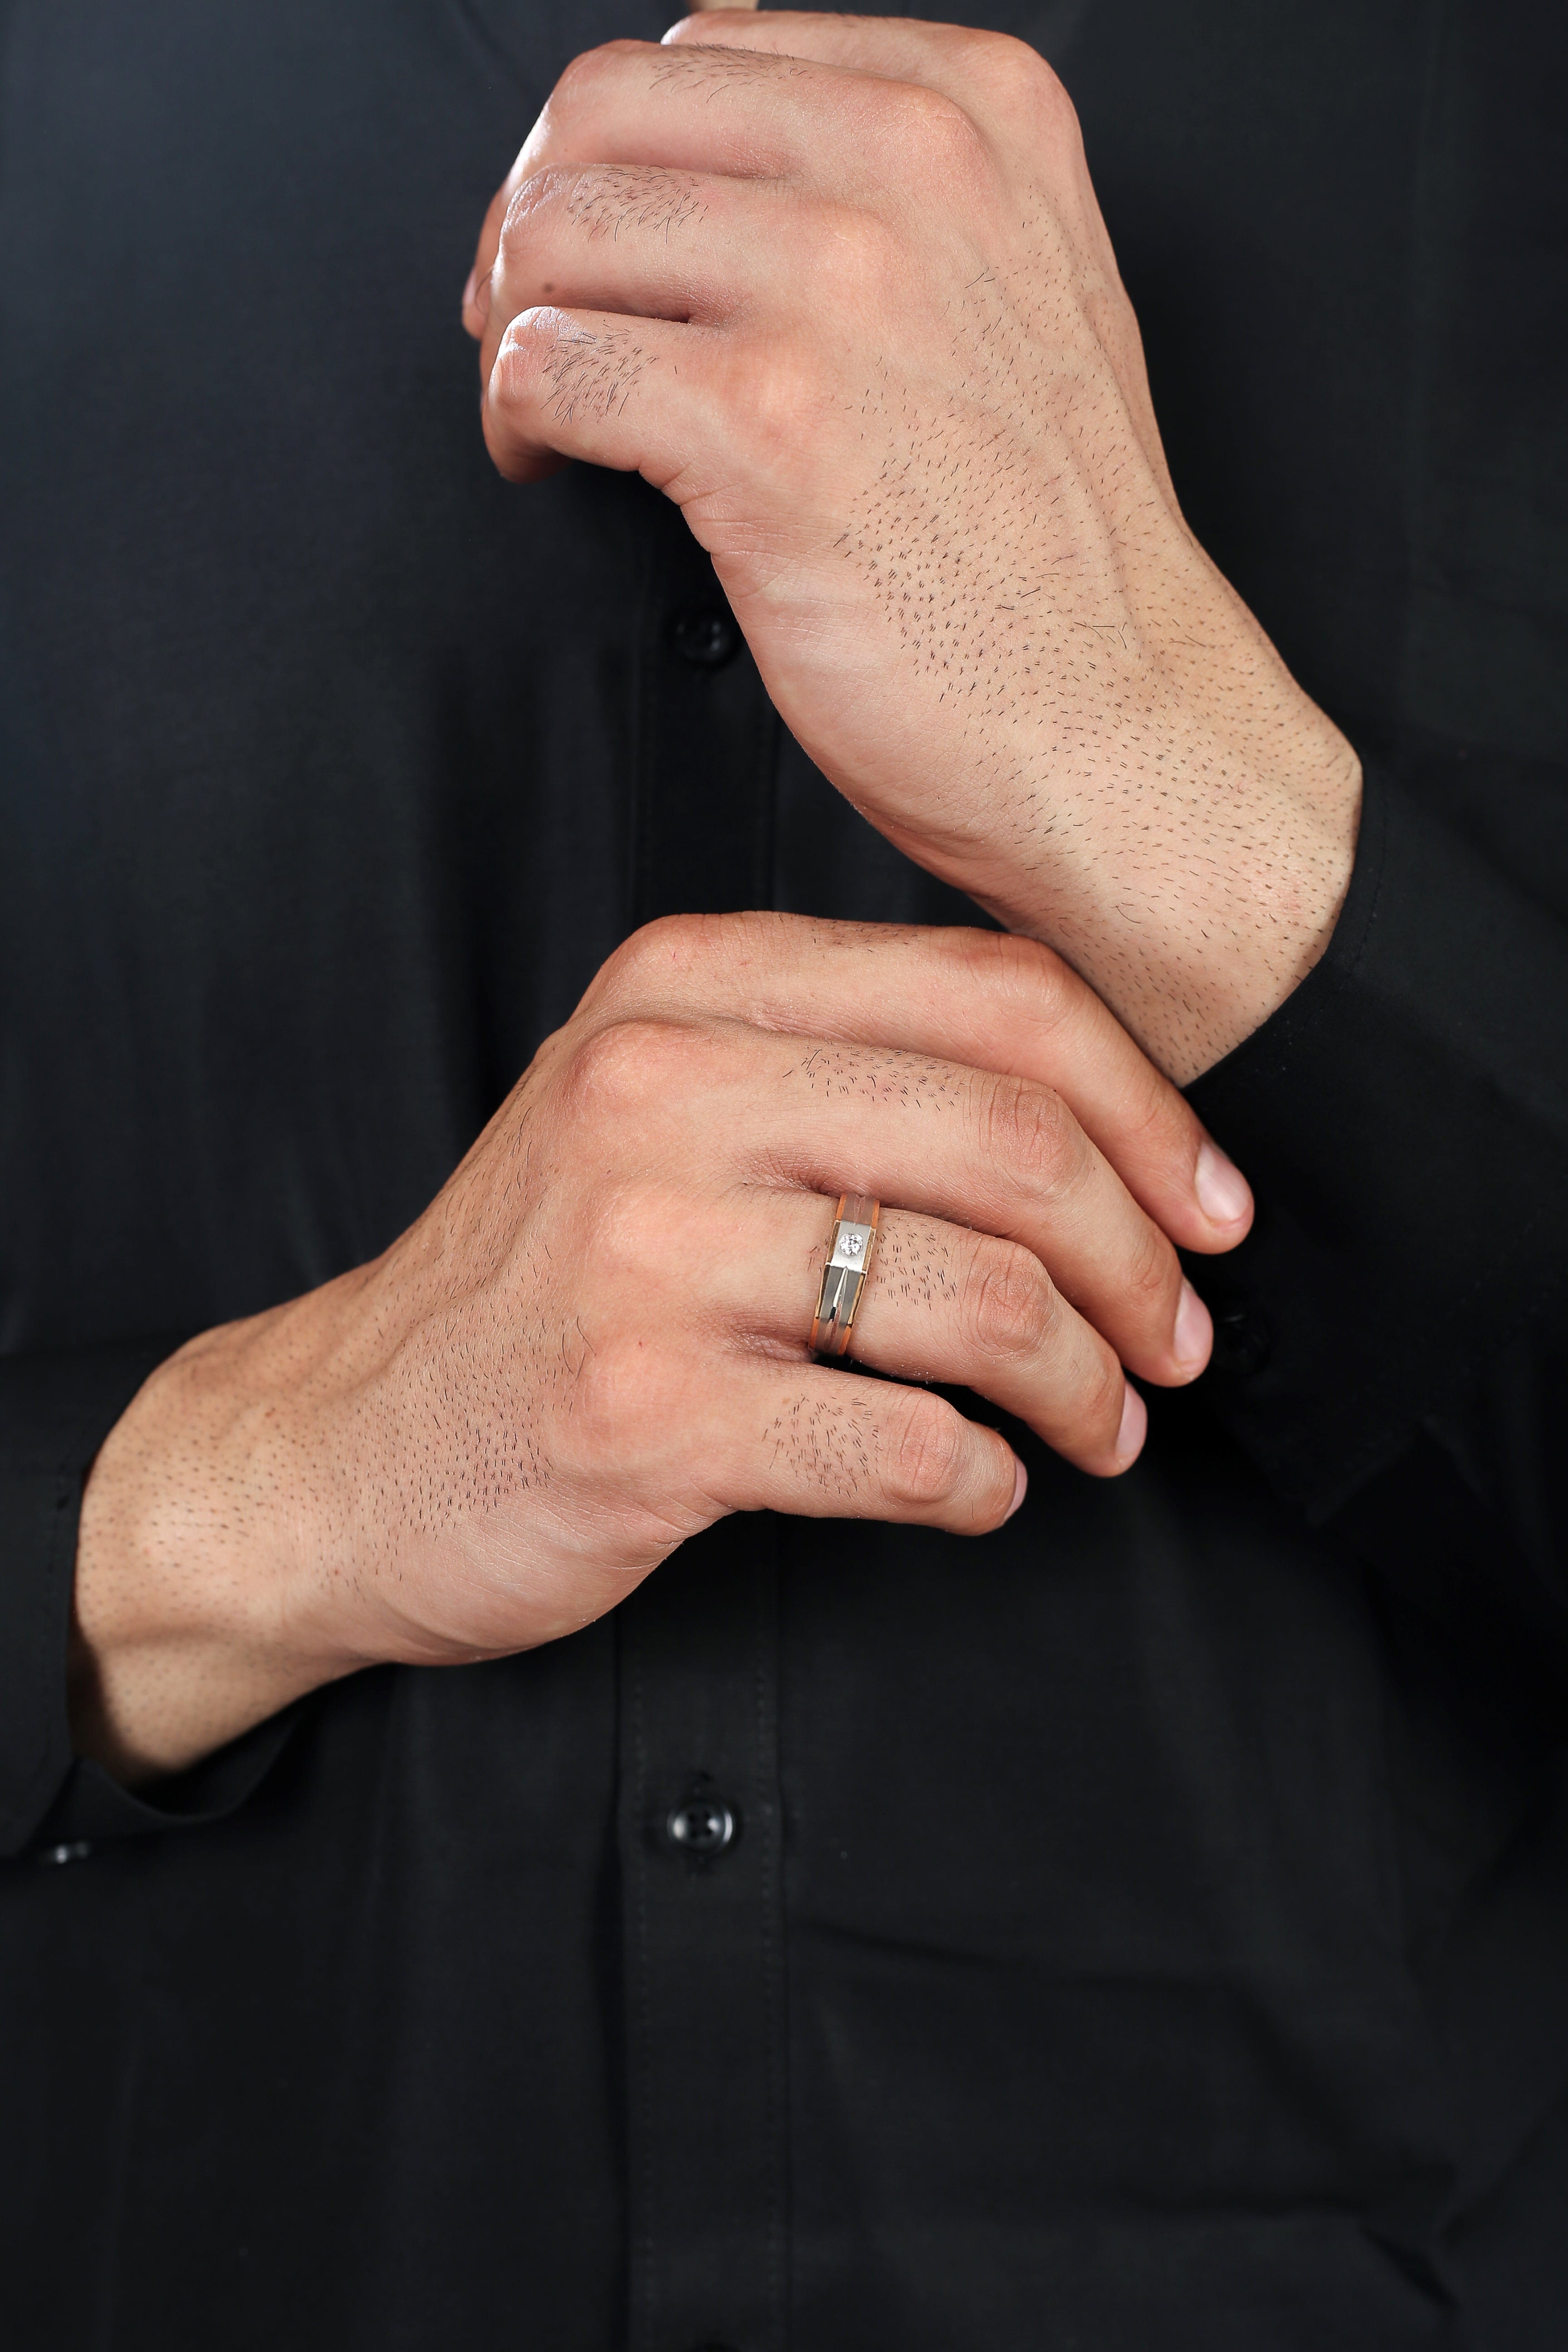 7.45 mm Men's Engagement Ring I1 G 0.85Ct Natural Diamond Prong Bar Set 14K  Gold | eBay